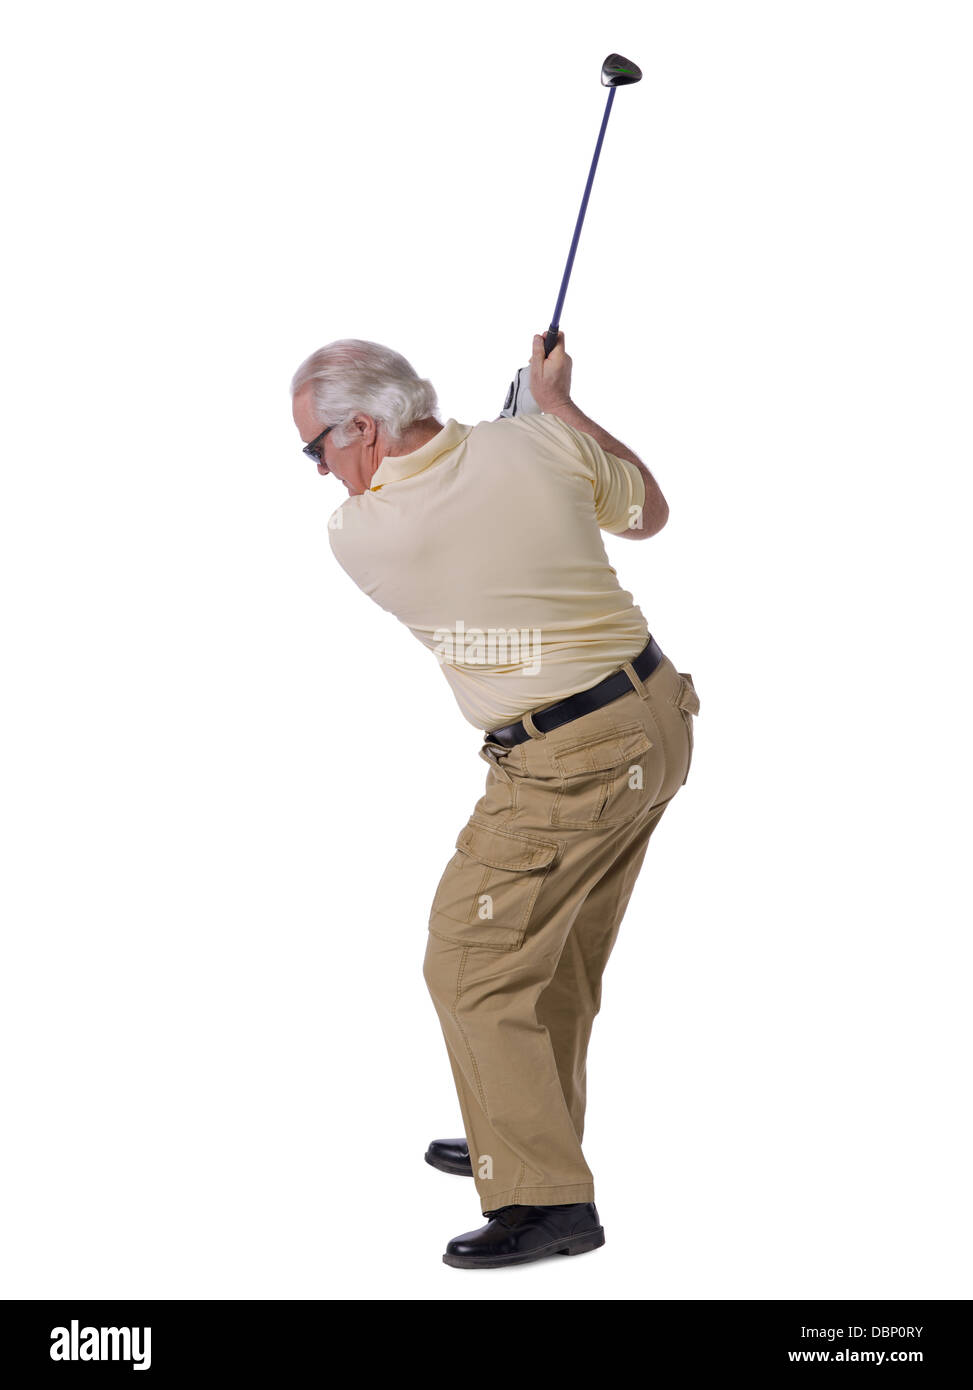 golf man Stock Photo